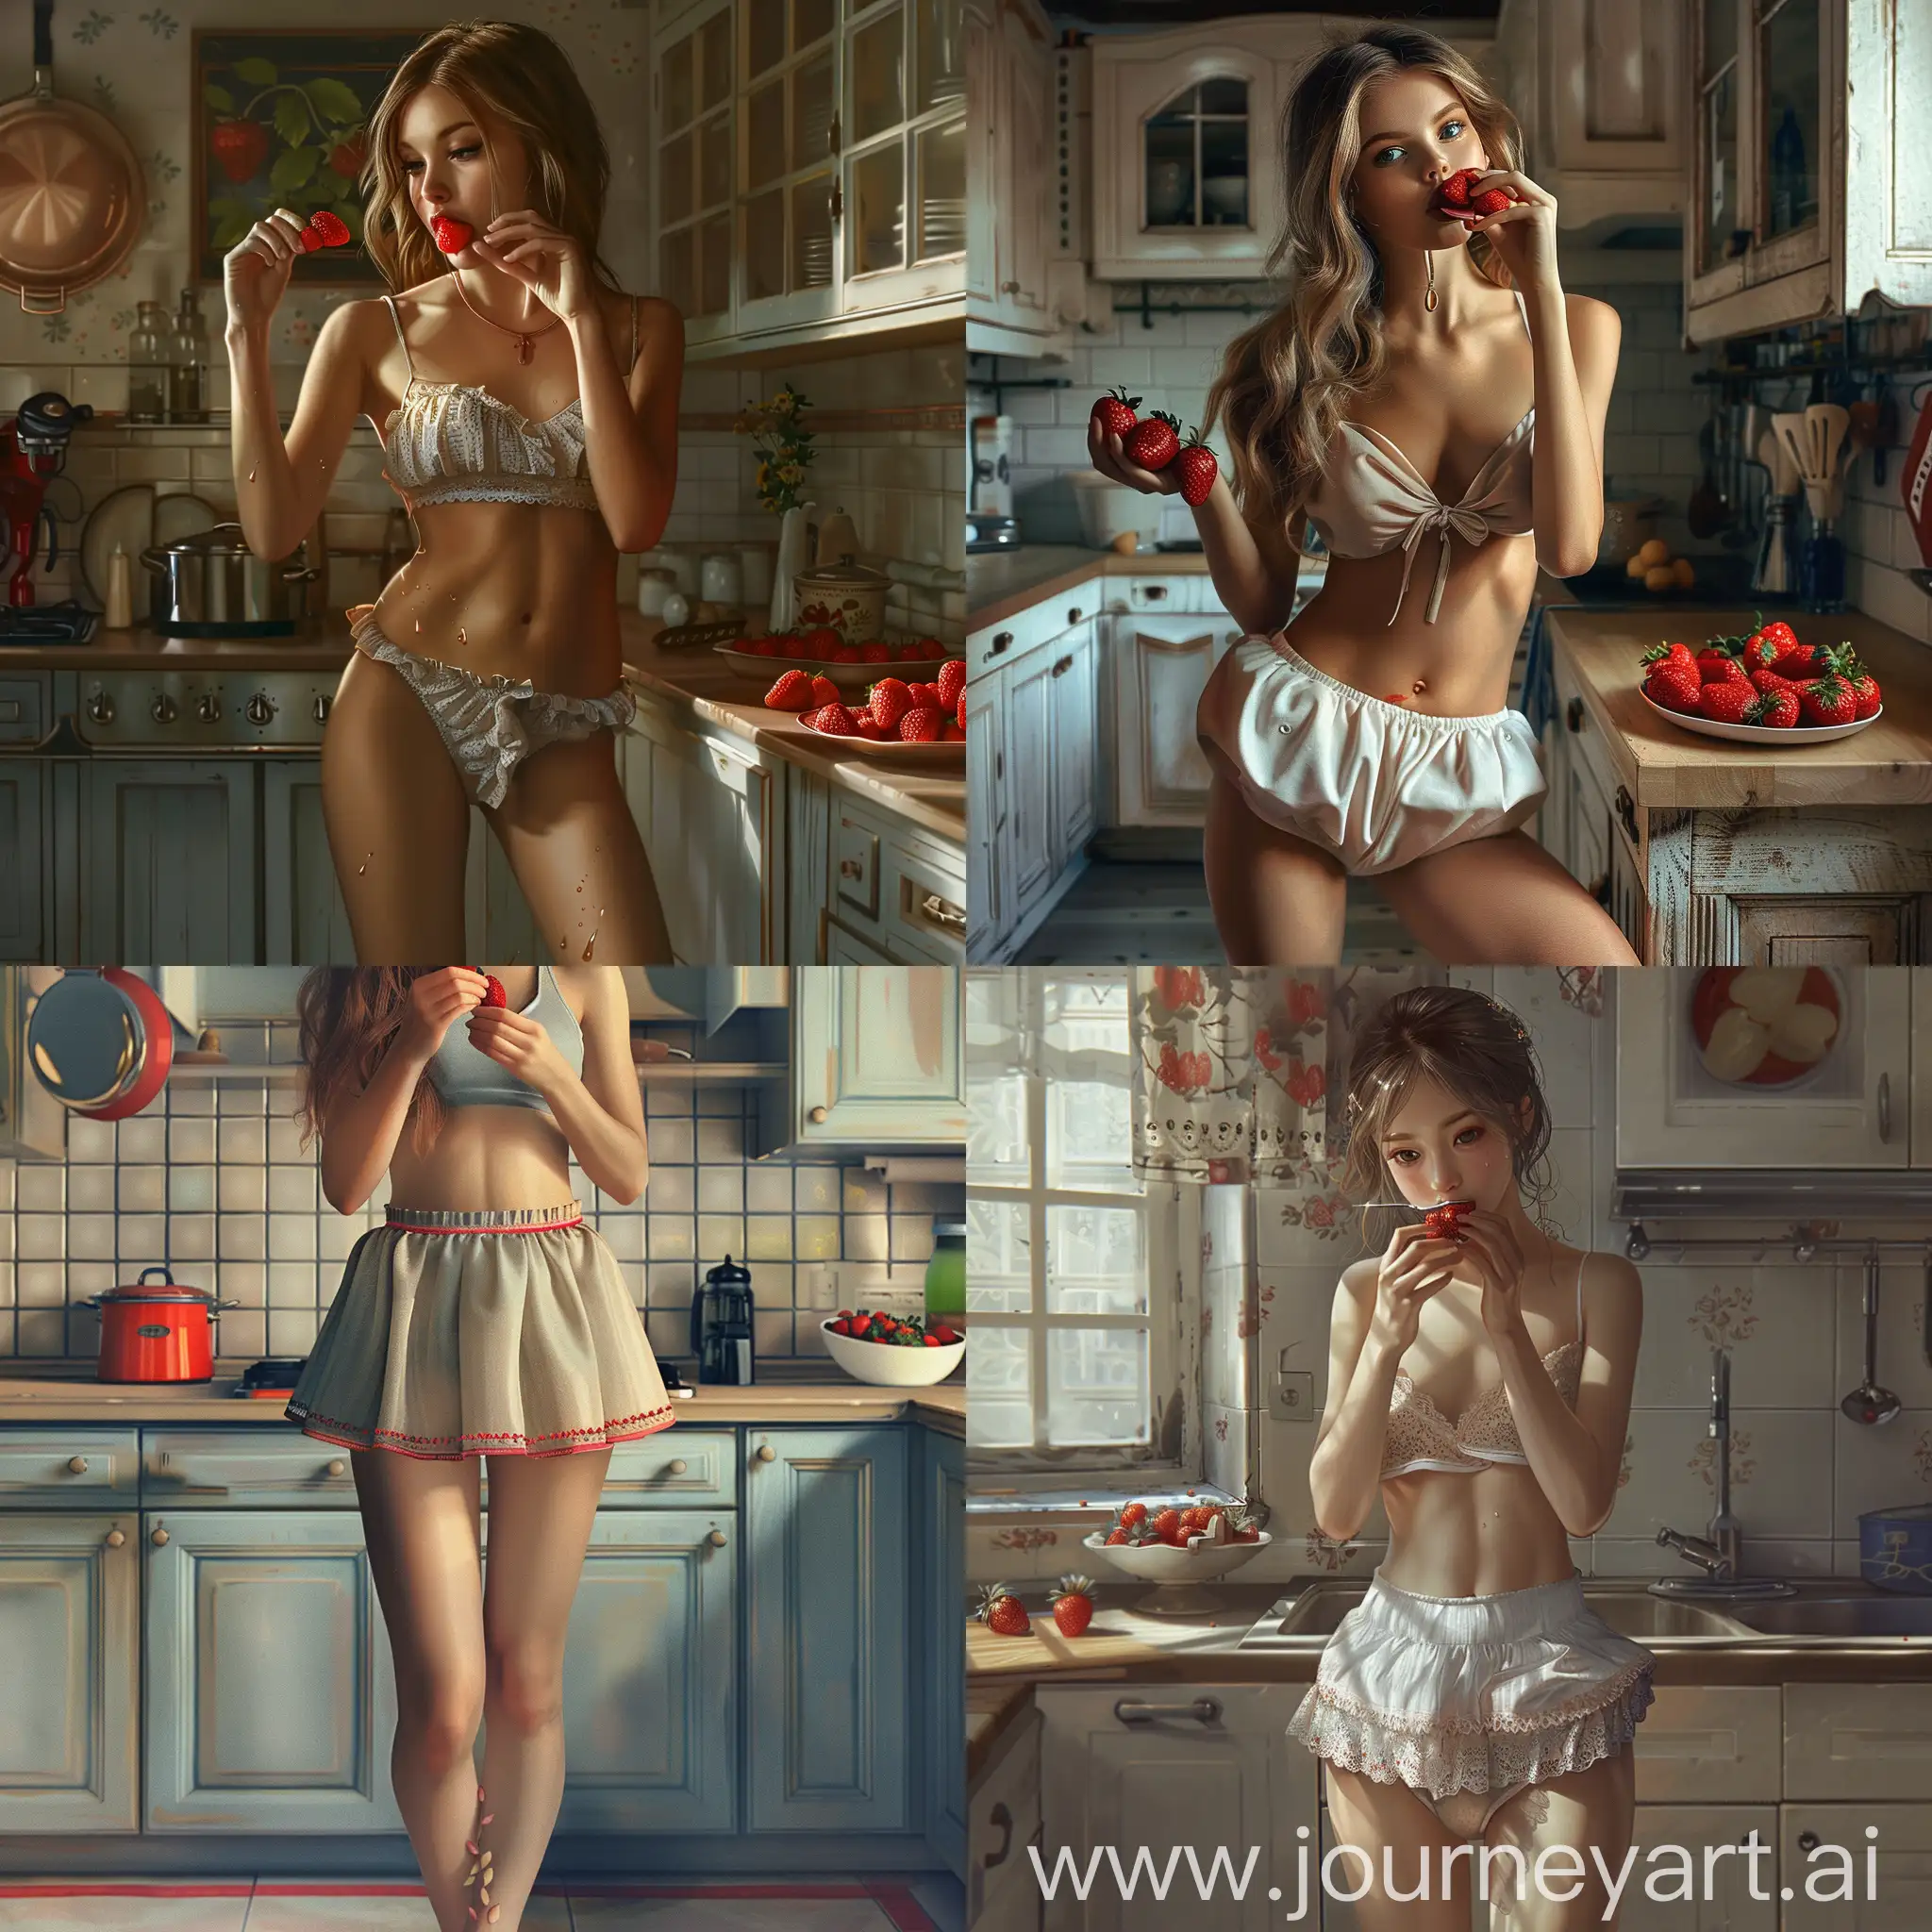 Elegant-Kitchen-Delight-Stylish-Girl-Indulging-in-Strawberries